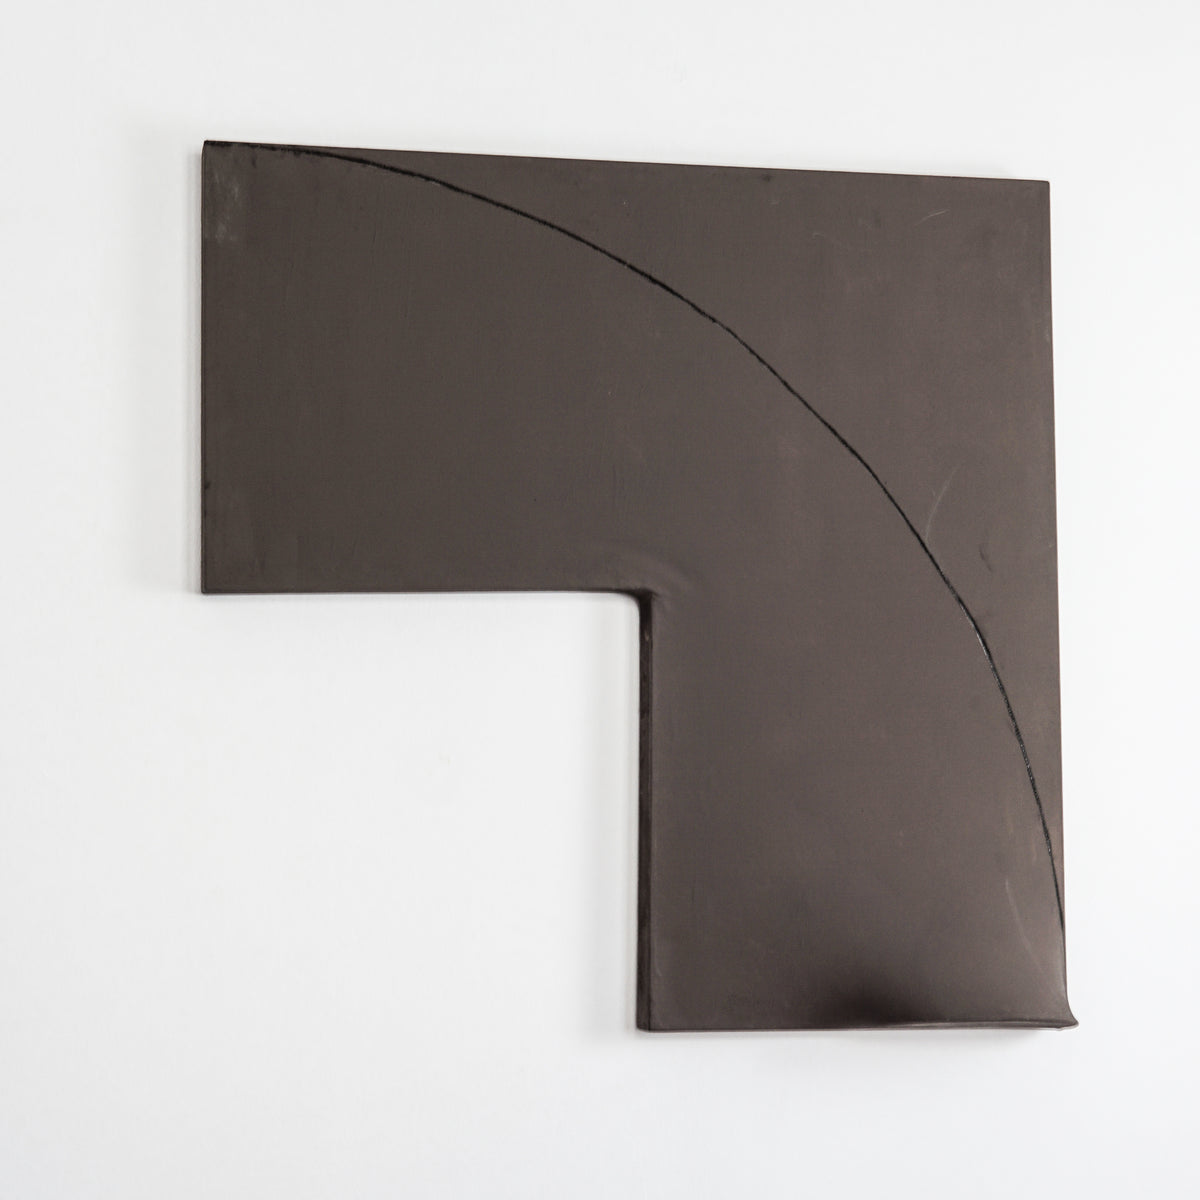 André Costa | Errare Humanum Est | 2019 |  Acrylic on fabric | 79.8 × 79.8 × 15 cm